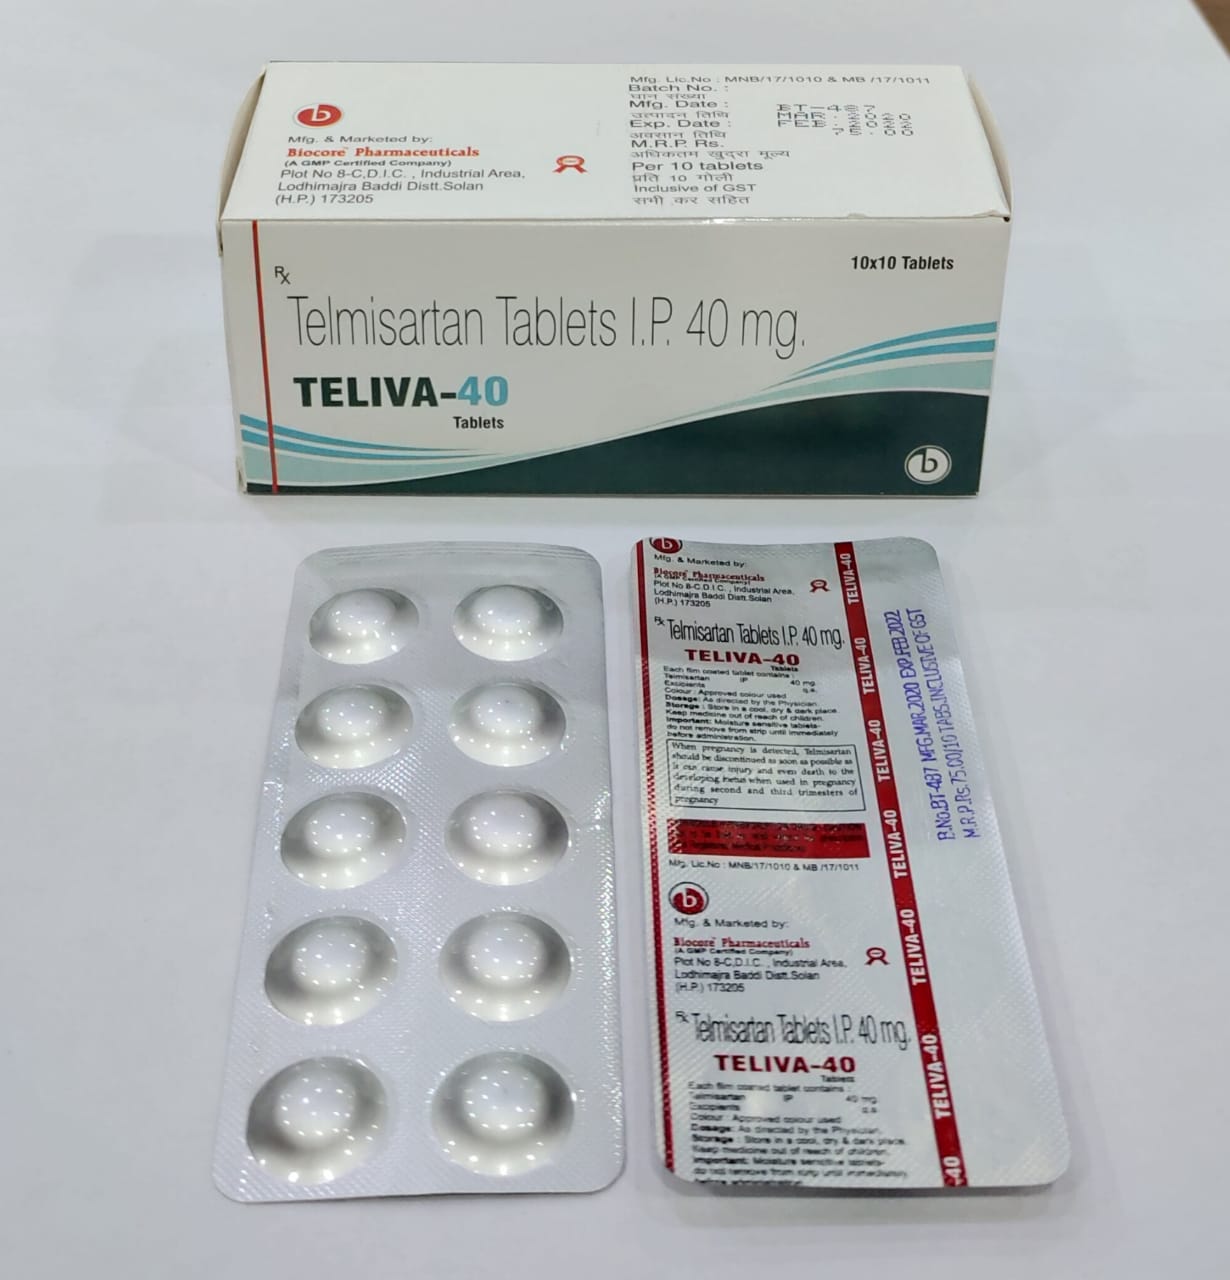 TELIVA-40 Tablets